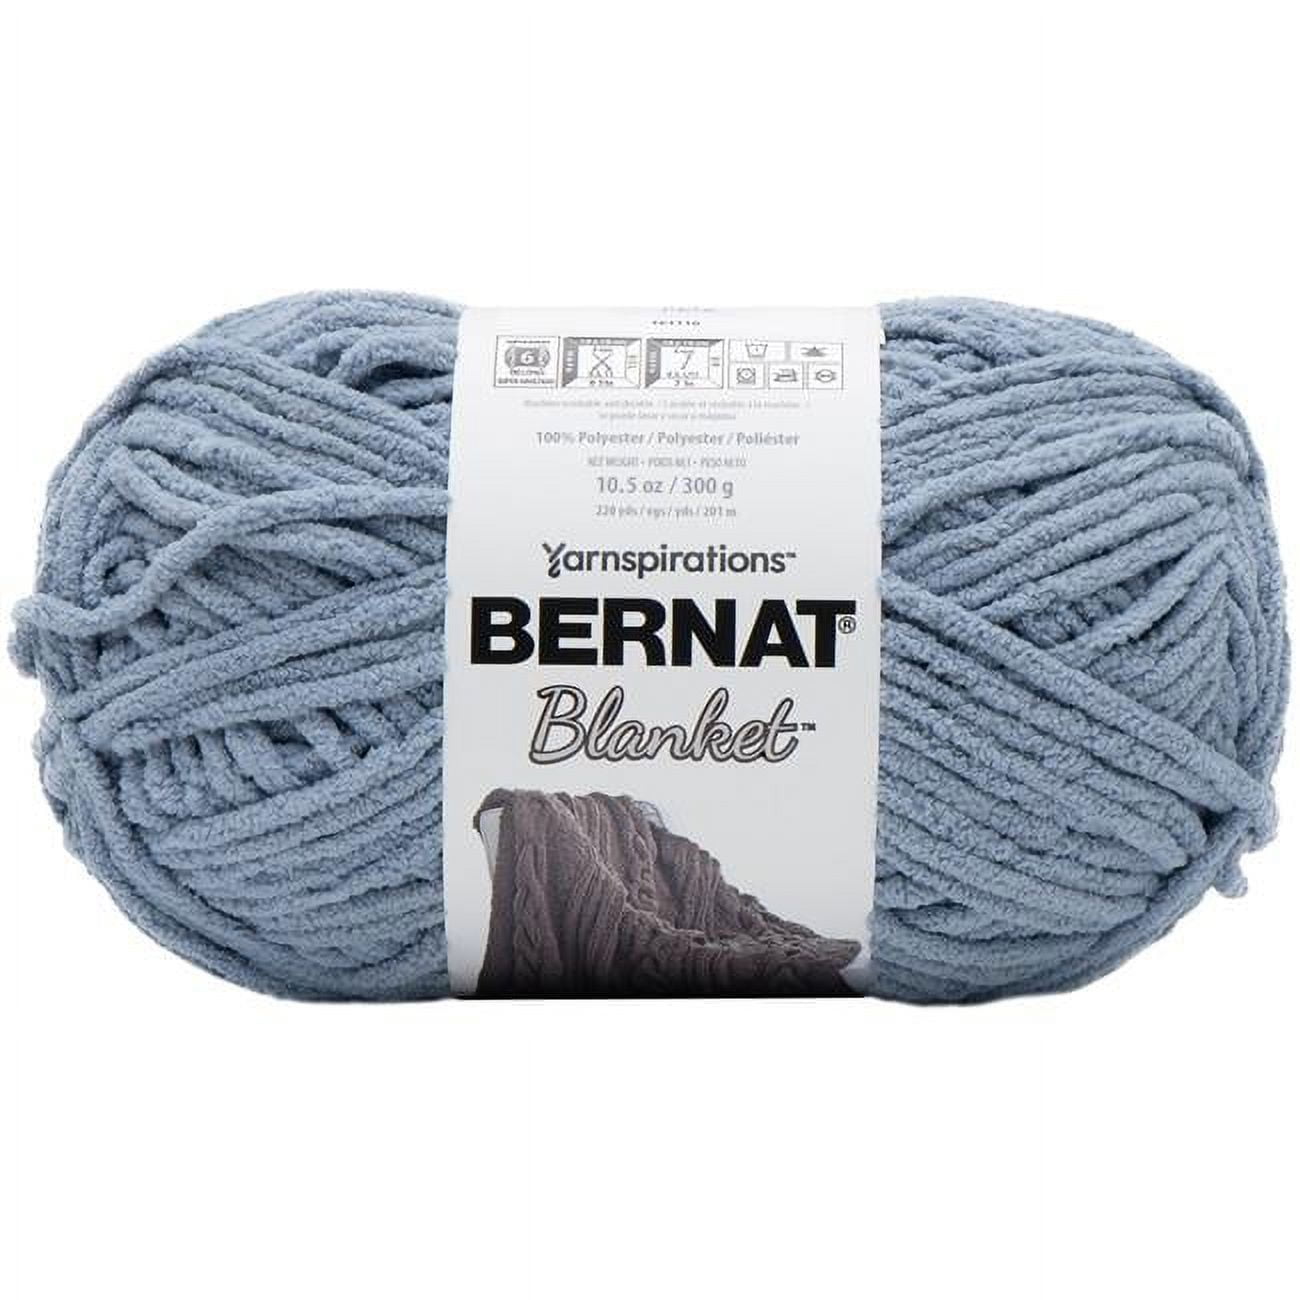 Bernat Big Blanket yarn 32 yds color Pale Gray 51004